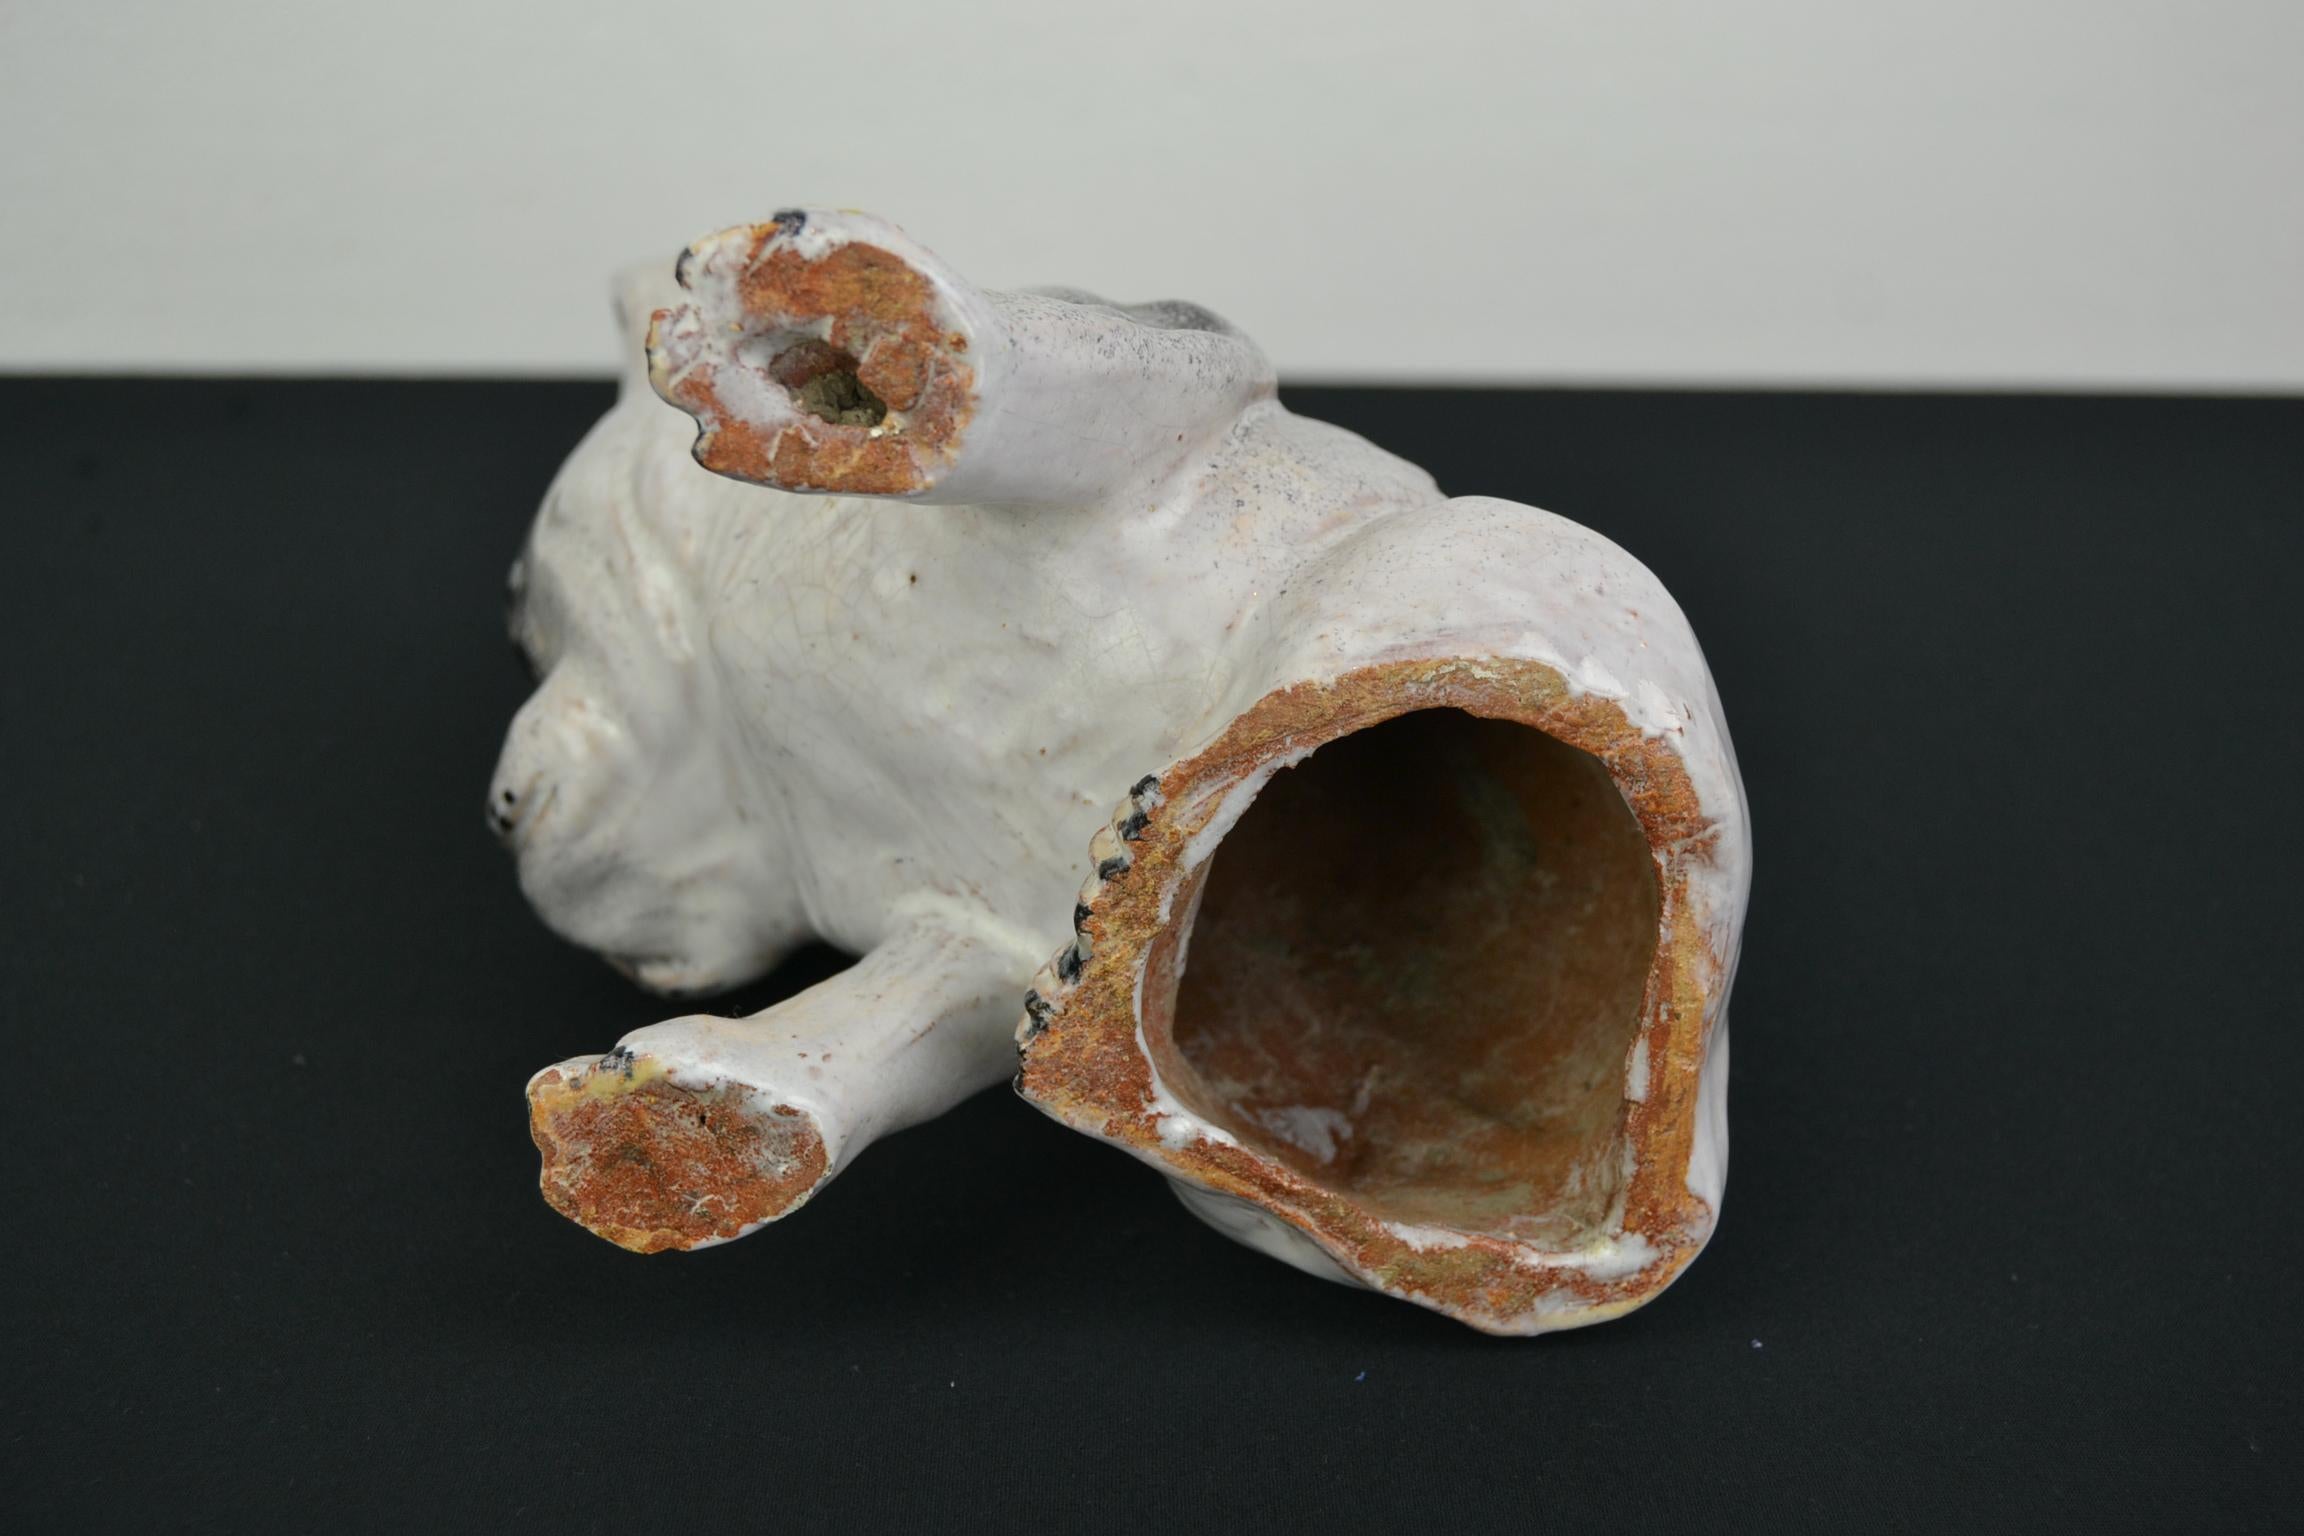 Ceramic French Bulldog Sculpture For Sale 11